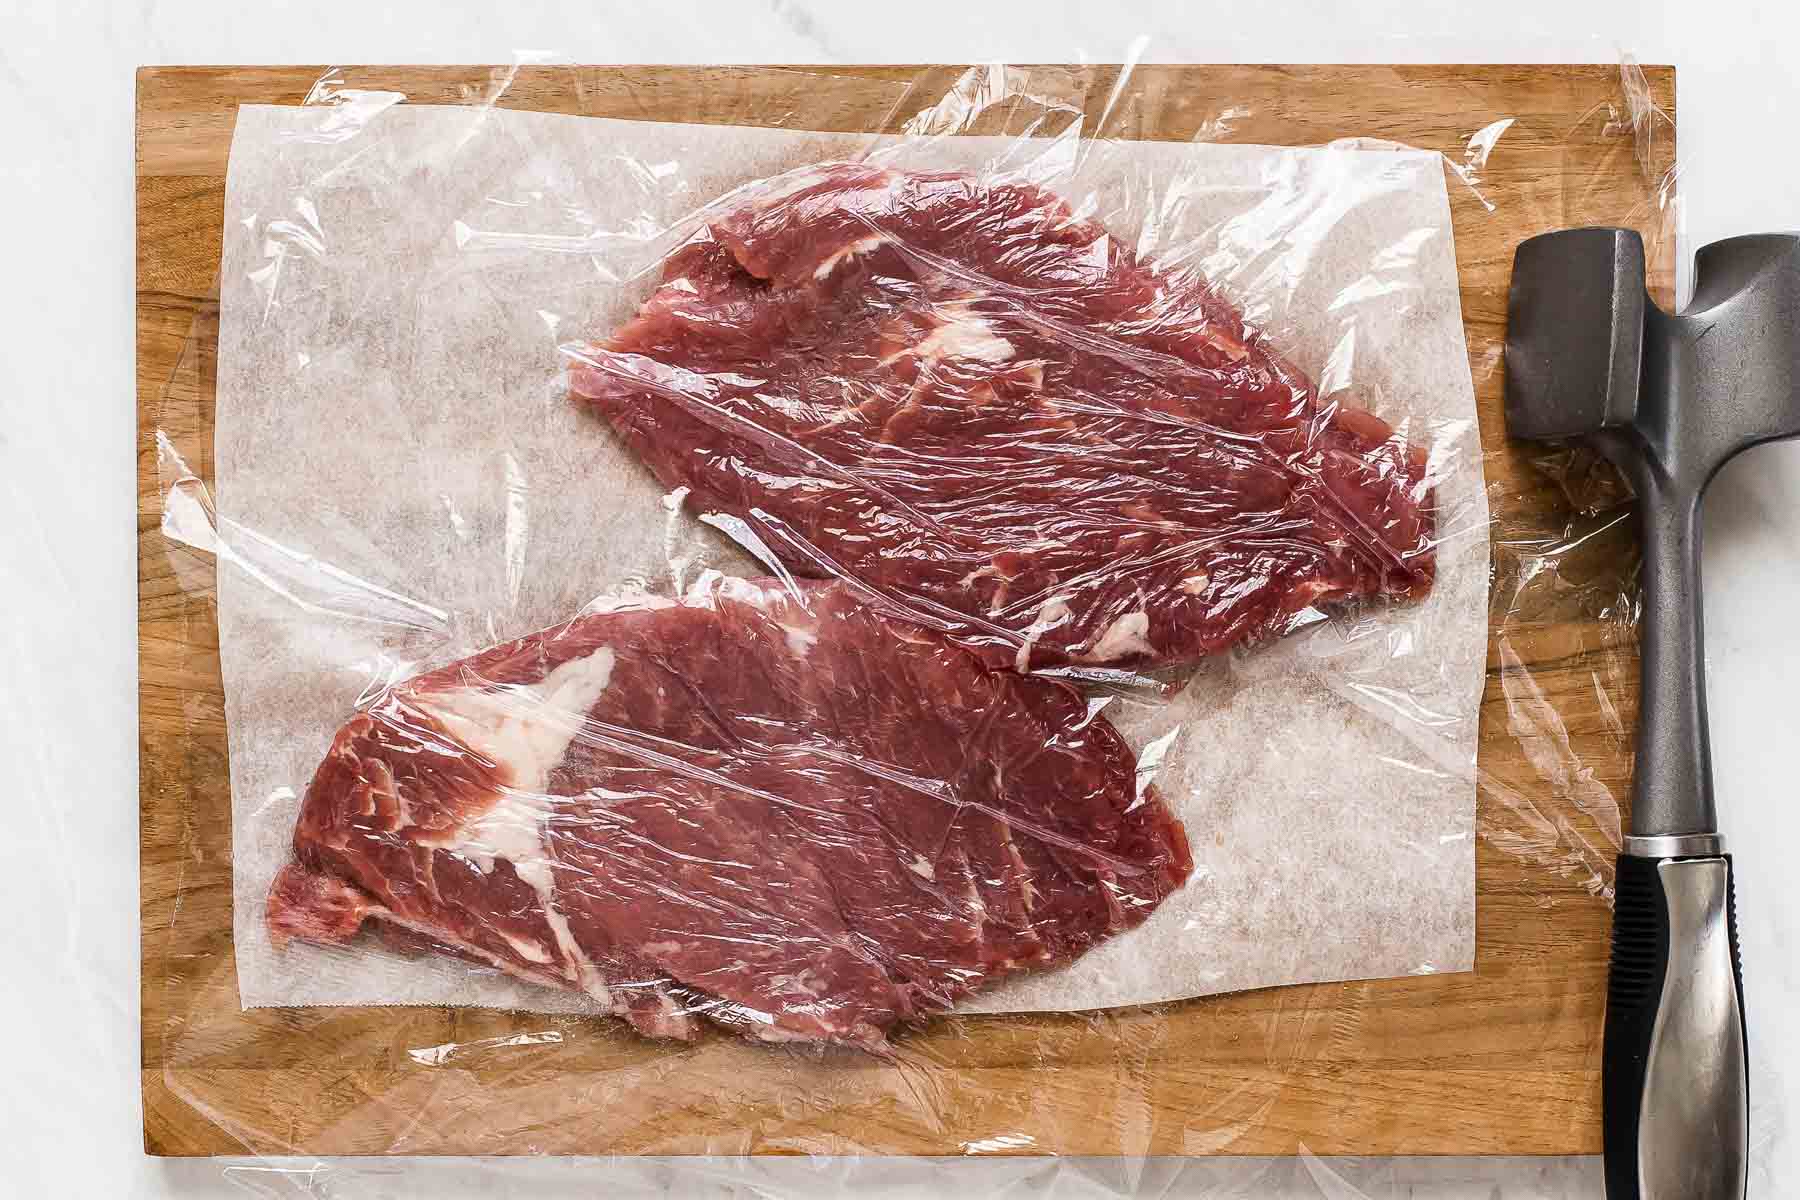 Pork tenderloin cut in half on cutting board covered in plastic.